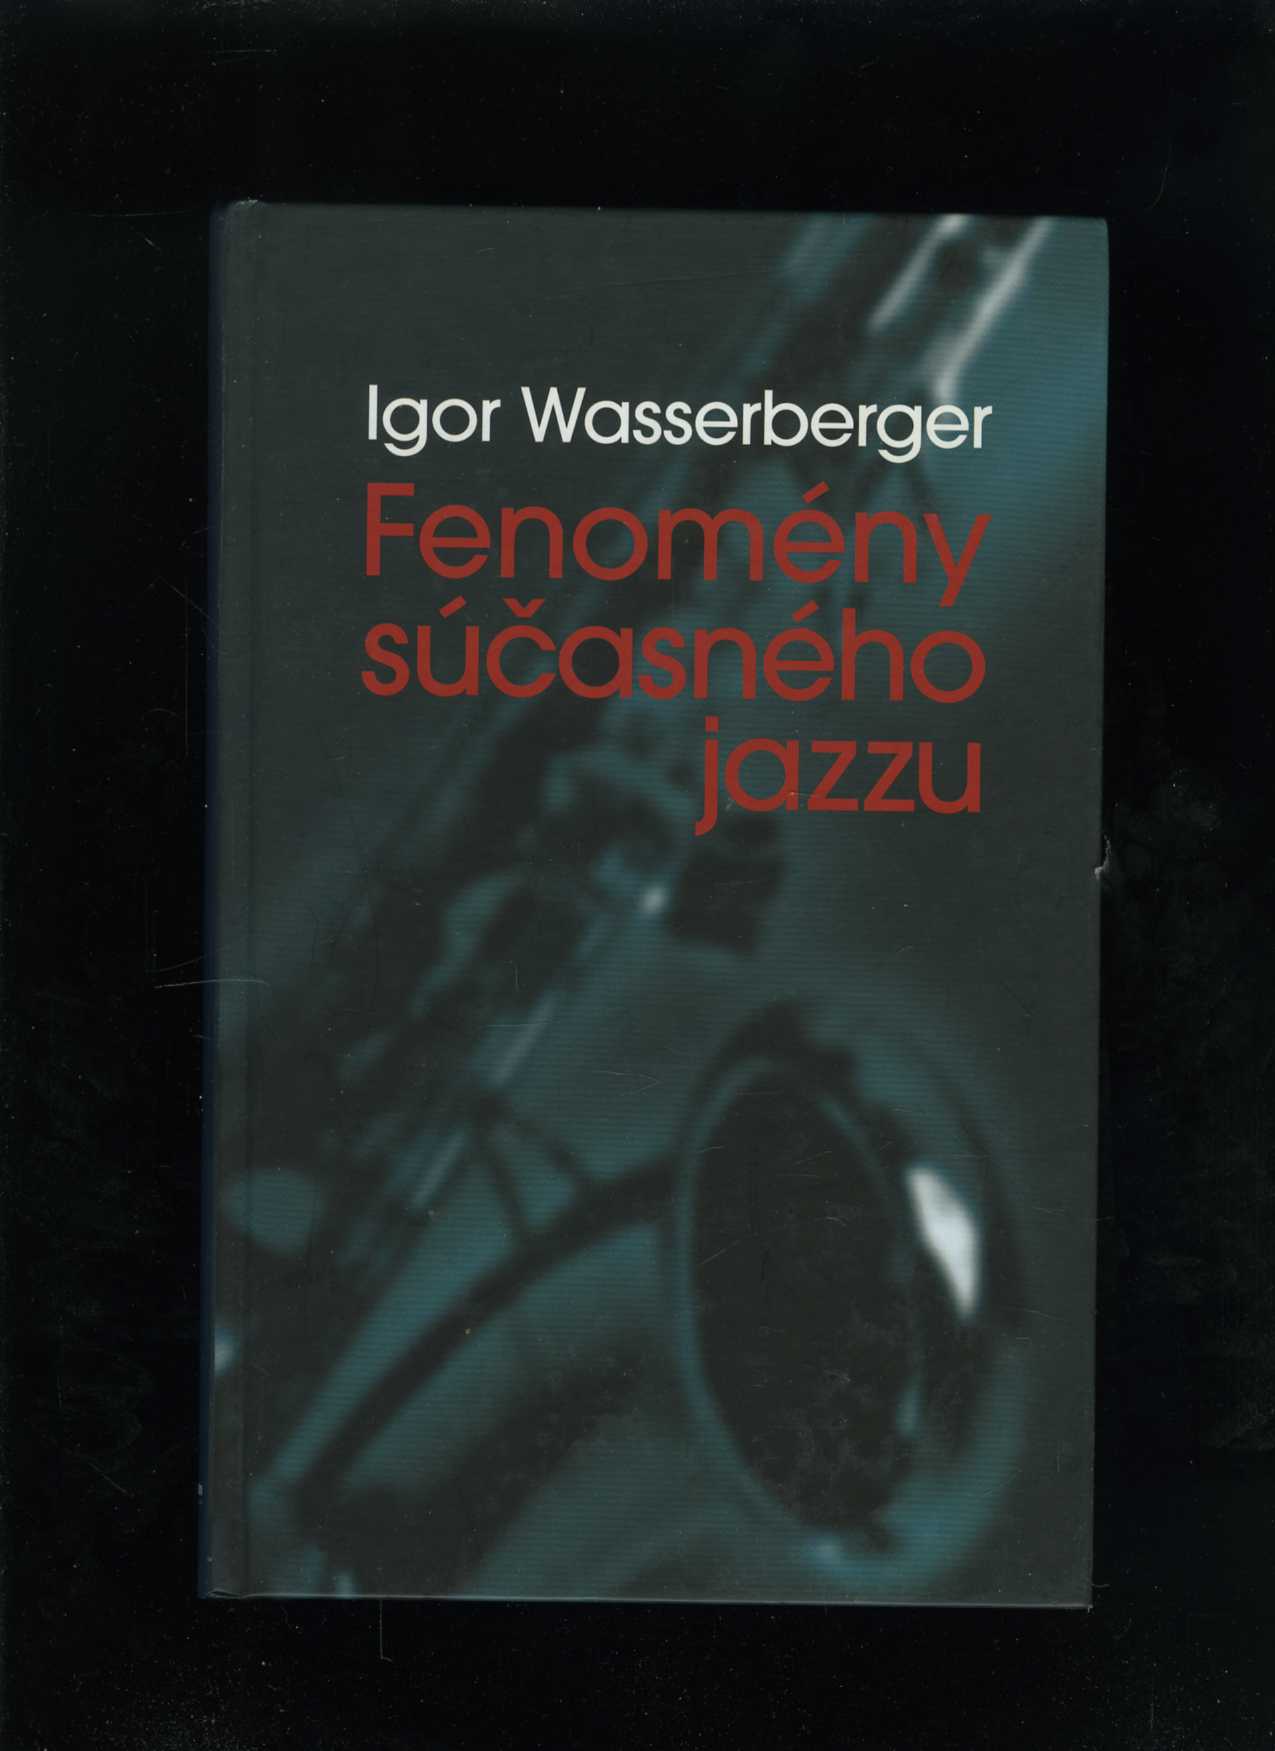 Fenomény súčasného jazzu (Igor Wasserberger)